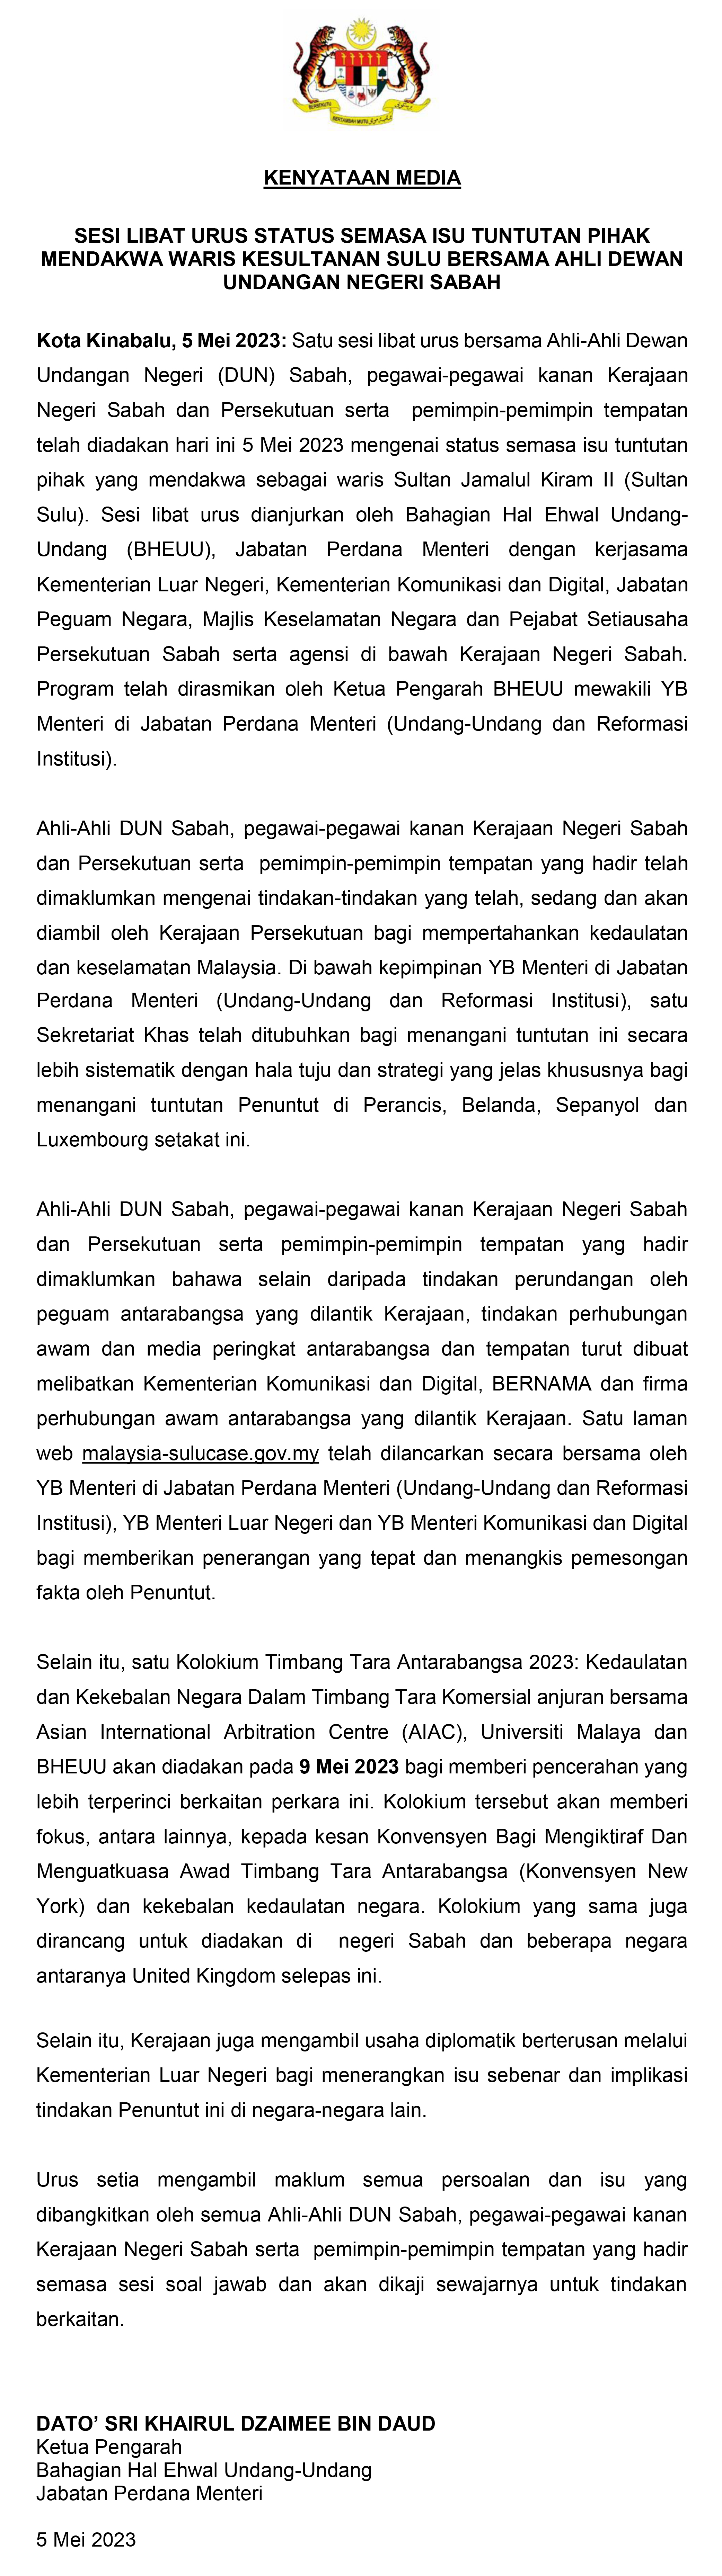 Kenyataan media BHEUU Sabah 5 Mei 2023 1